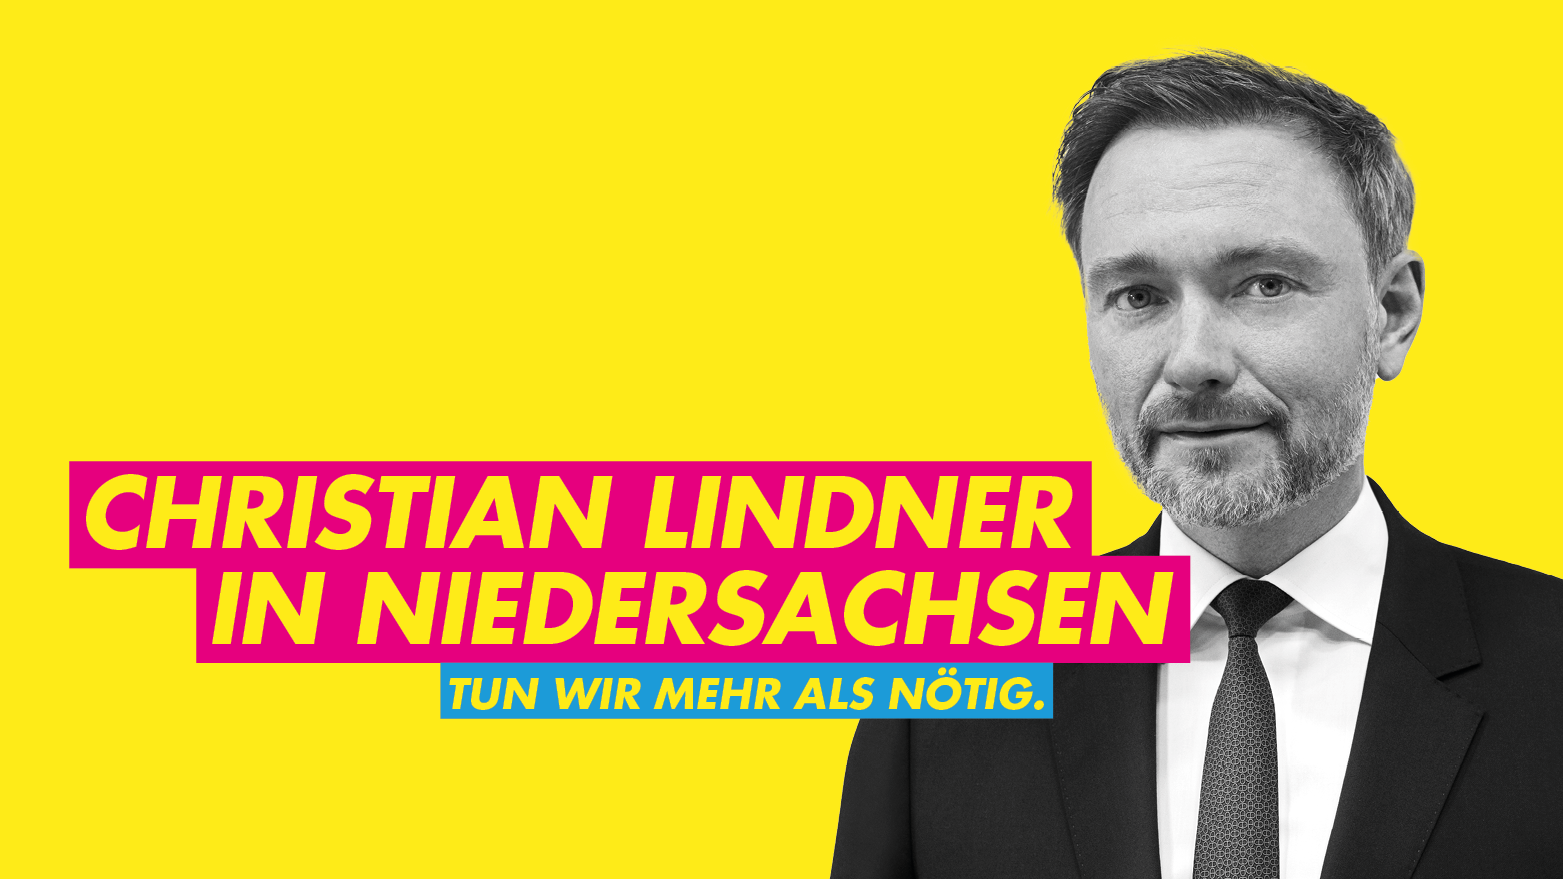 Christian Lindner in Niedersachsen